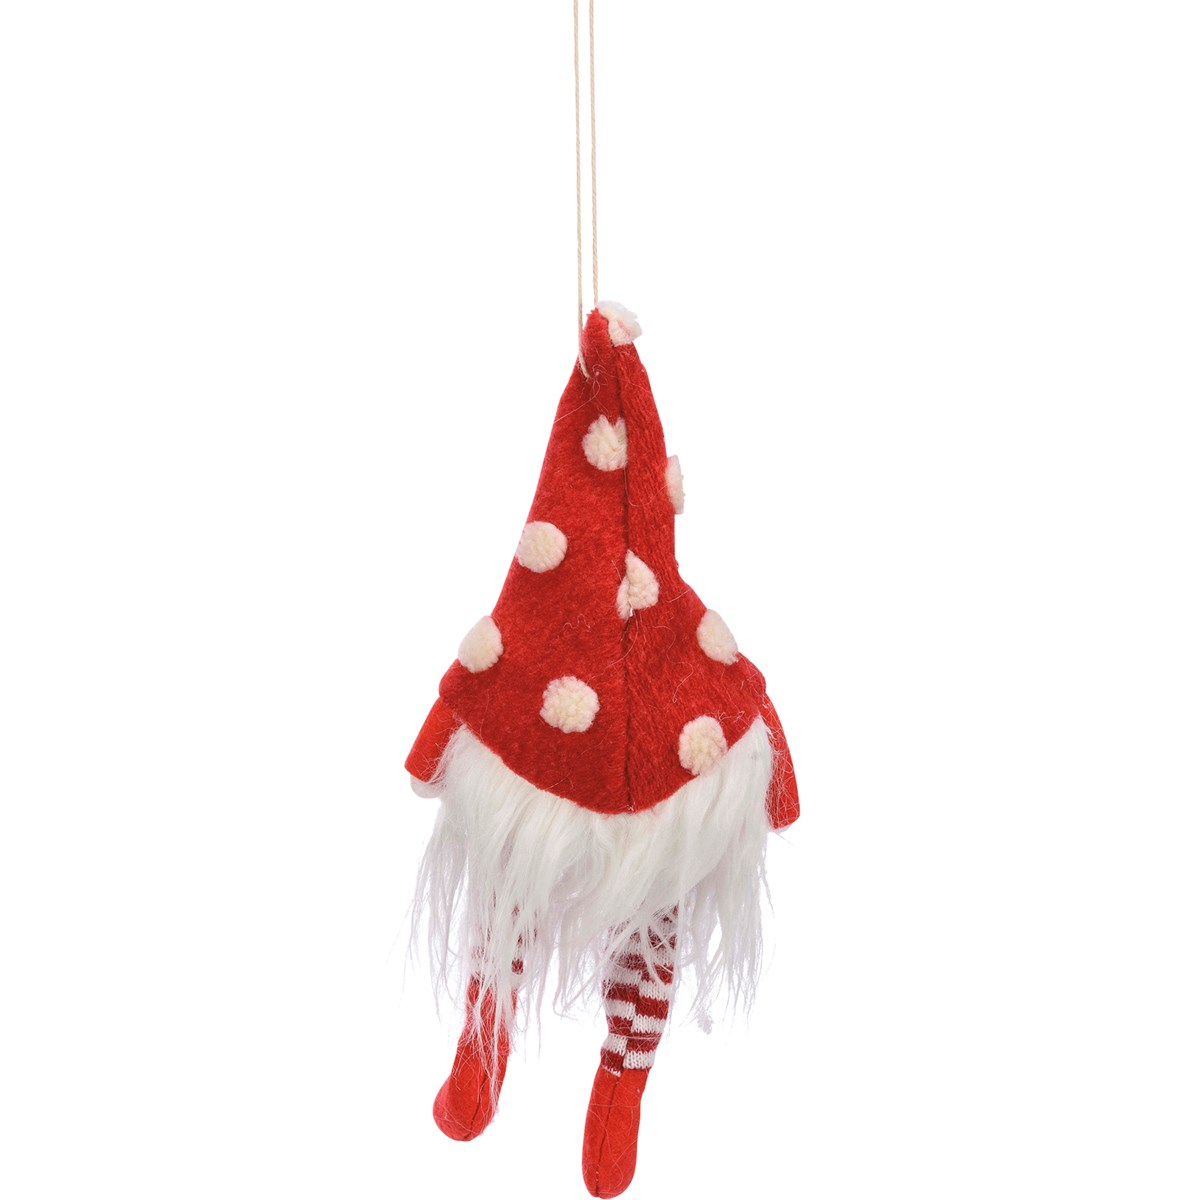 Ornament - Red Polka Dot Gnome - 4.75" x 12" x 3.50" - Polyester, Plastic, LED